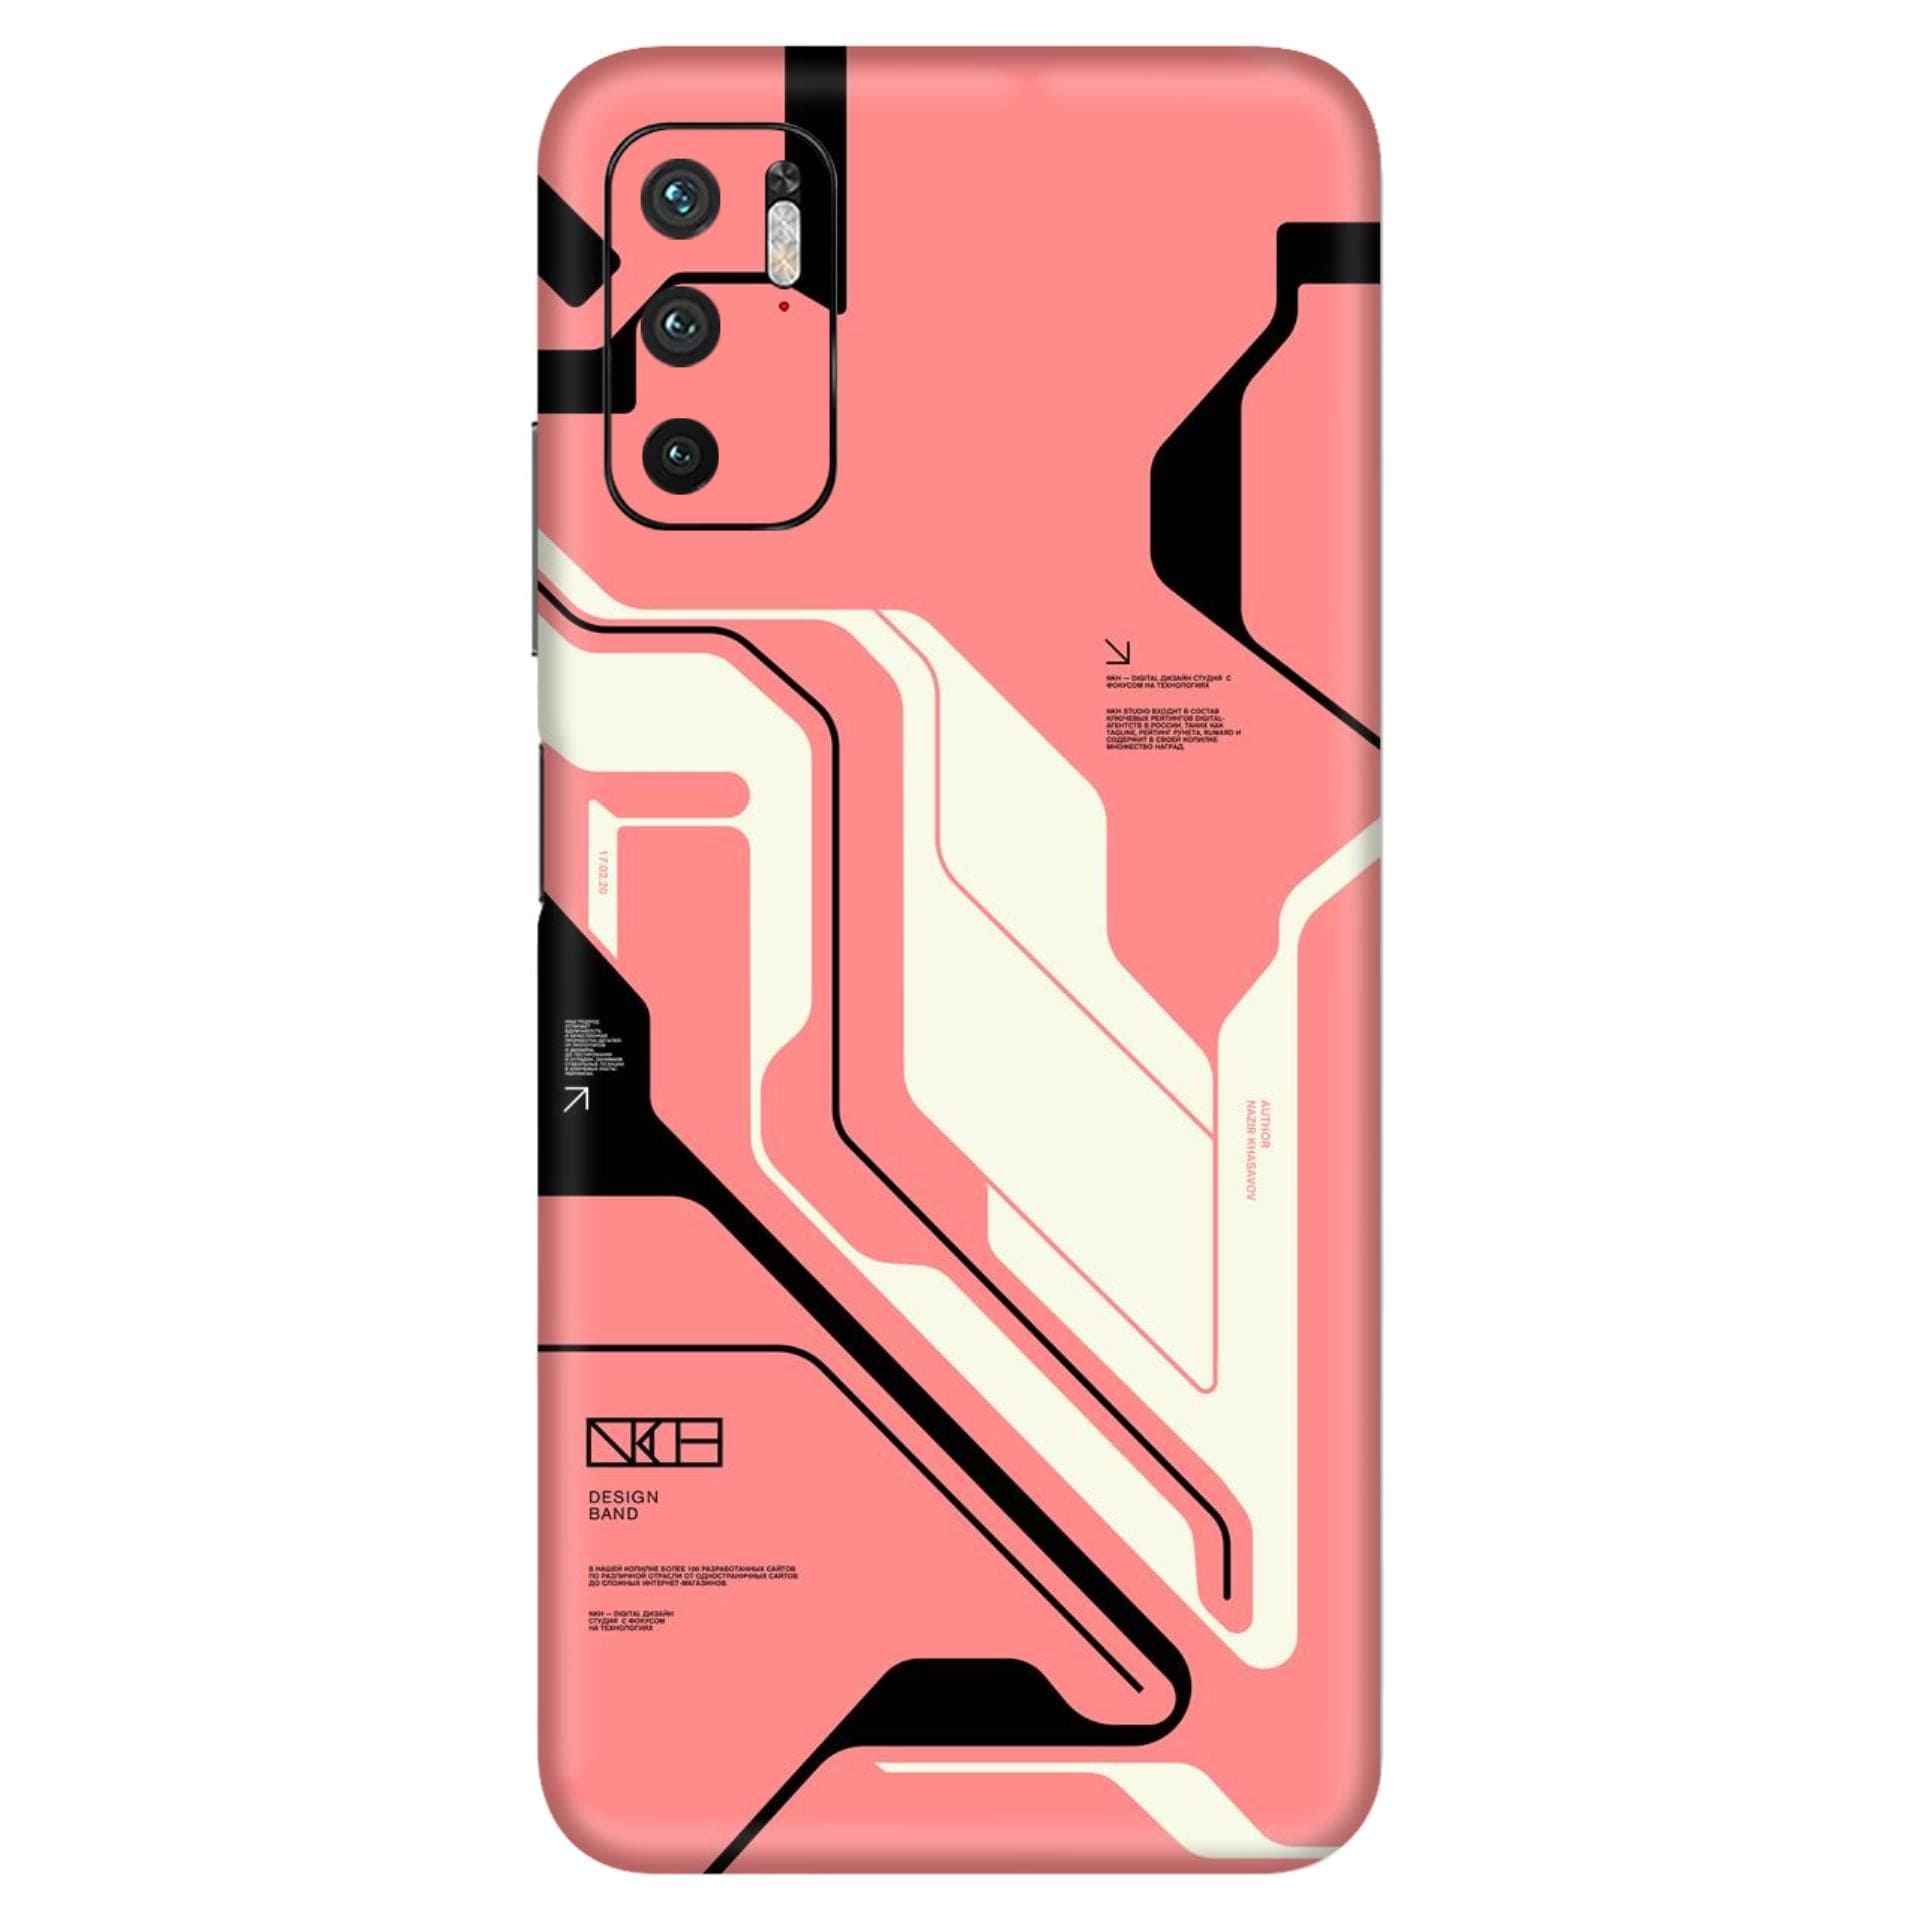 Redmi Note 10T Cyber pink skins